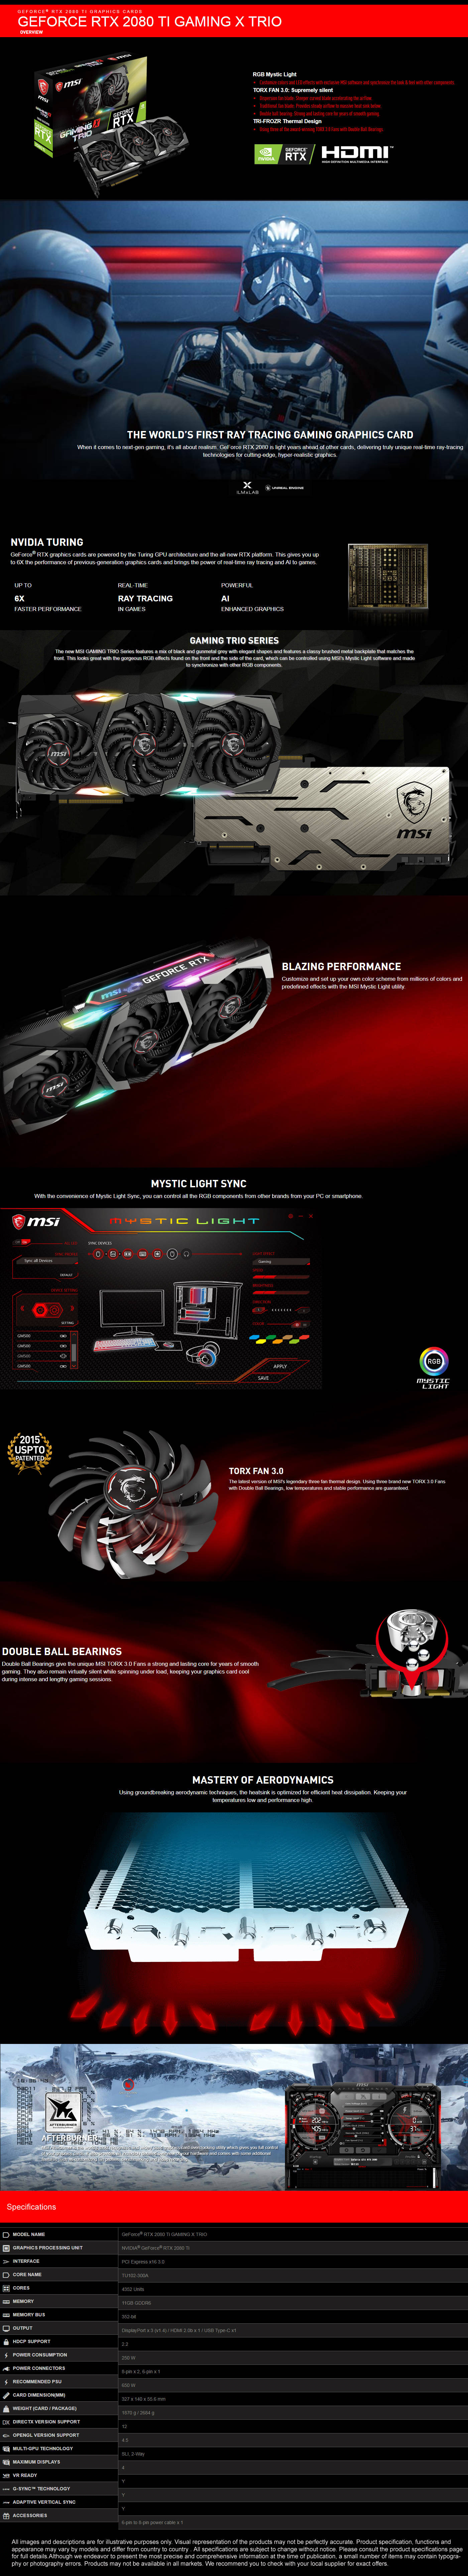  Buy Online MSI Geforce RTX 2080 Ti Gaming X Trio 11GB GDDR6